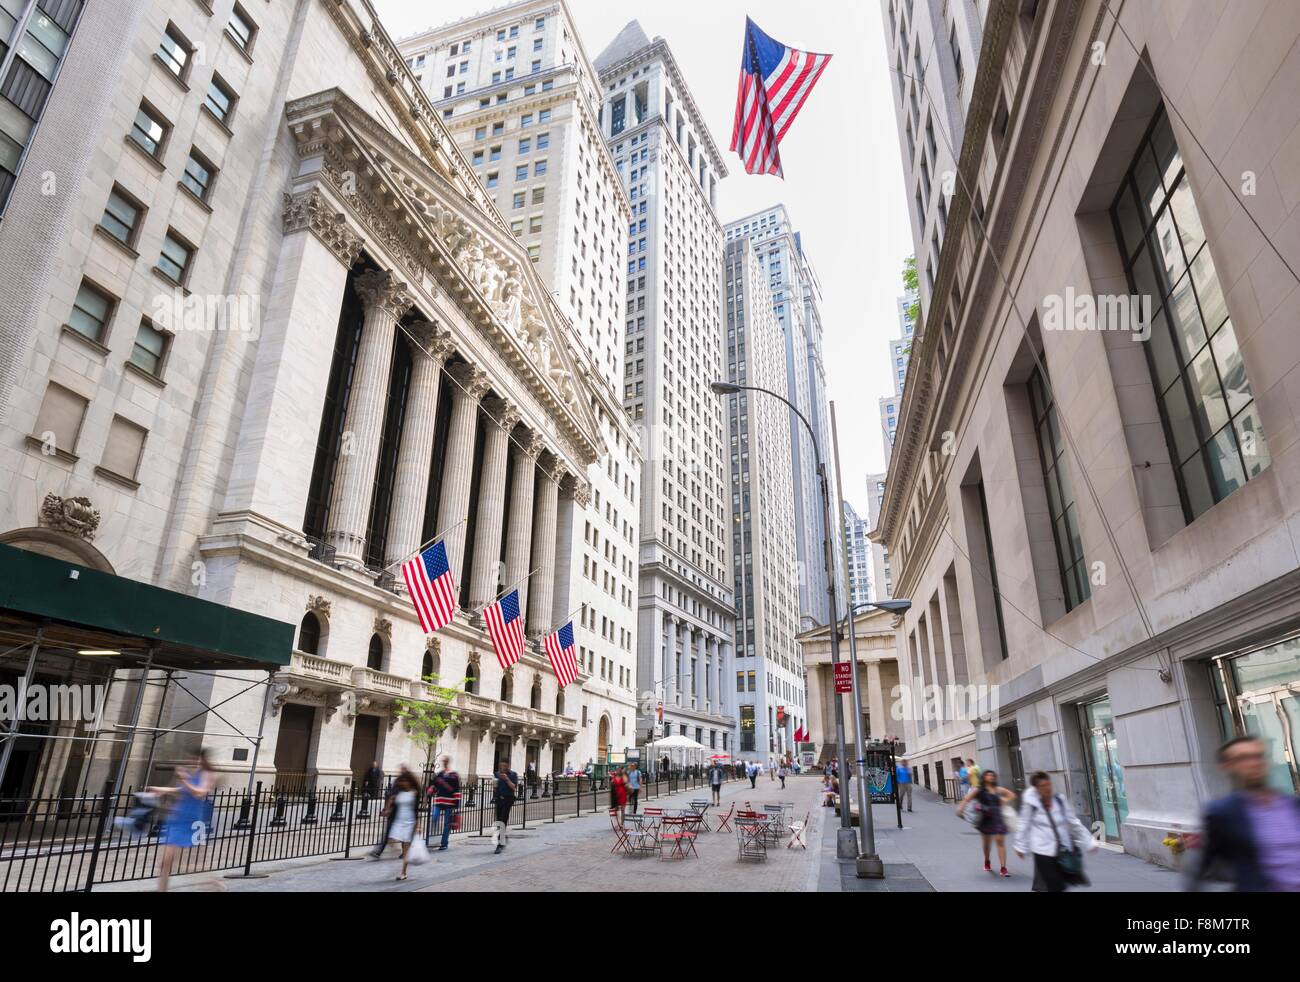 New York Stock Exchange e bandierine americane, New York, Stati Uniti d'America Foto Stock